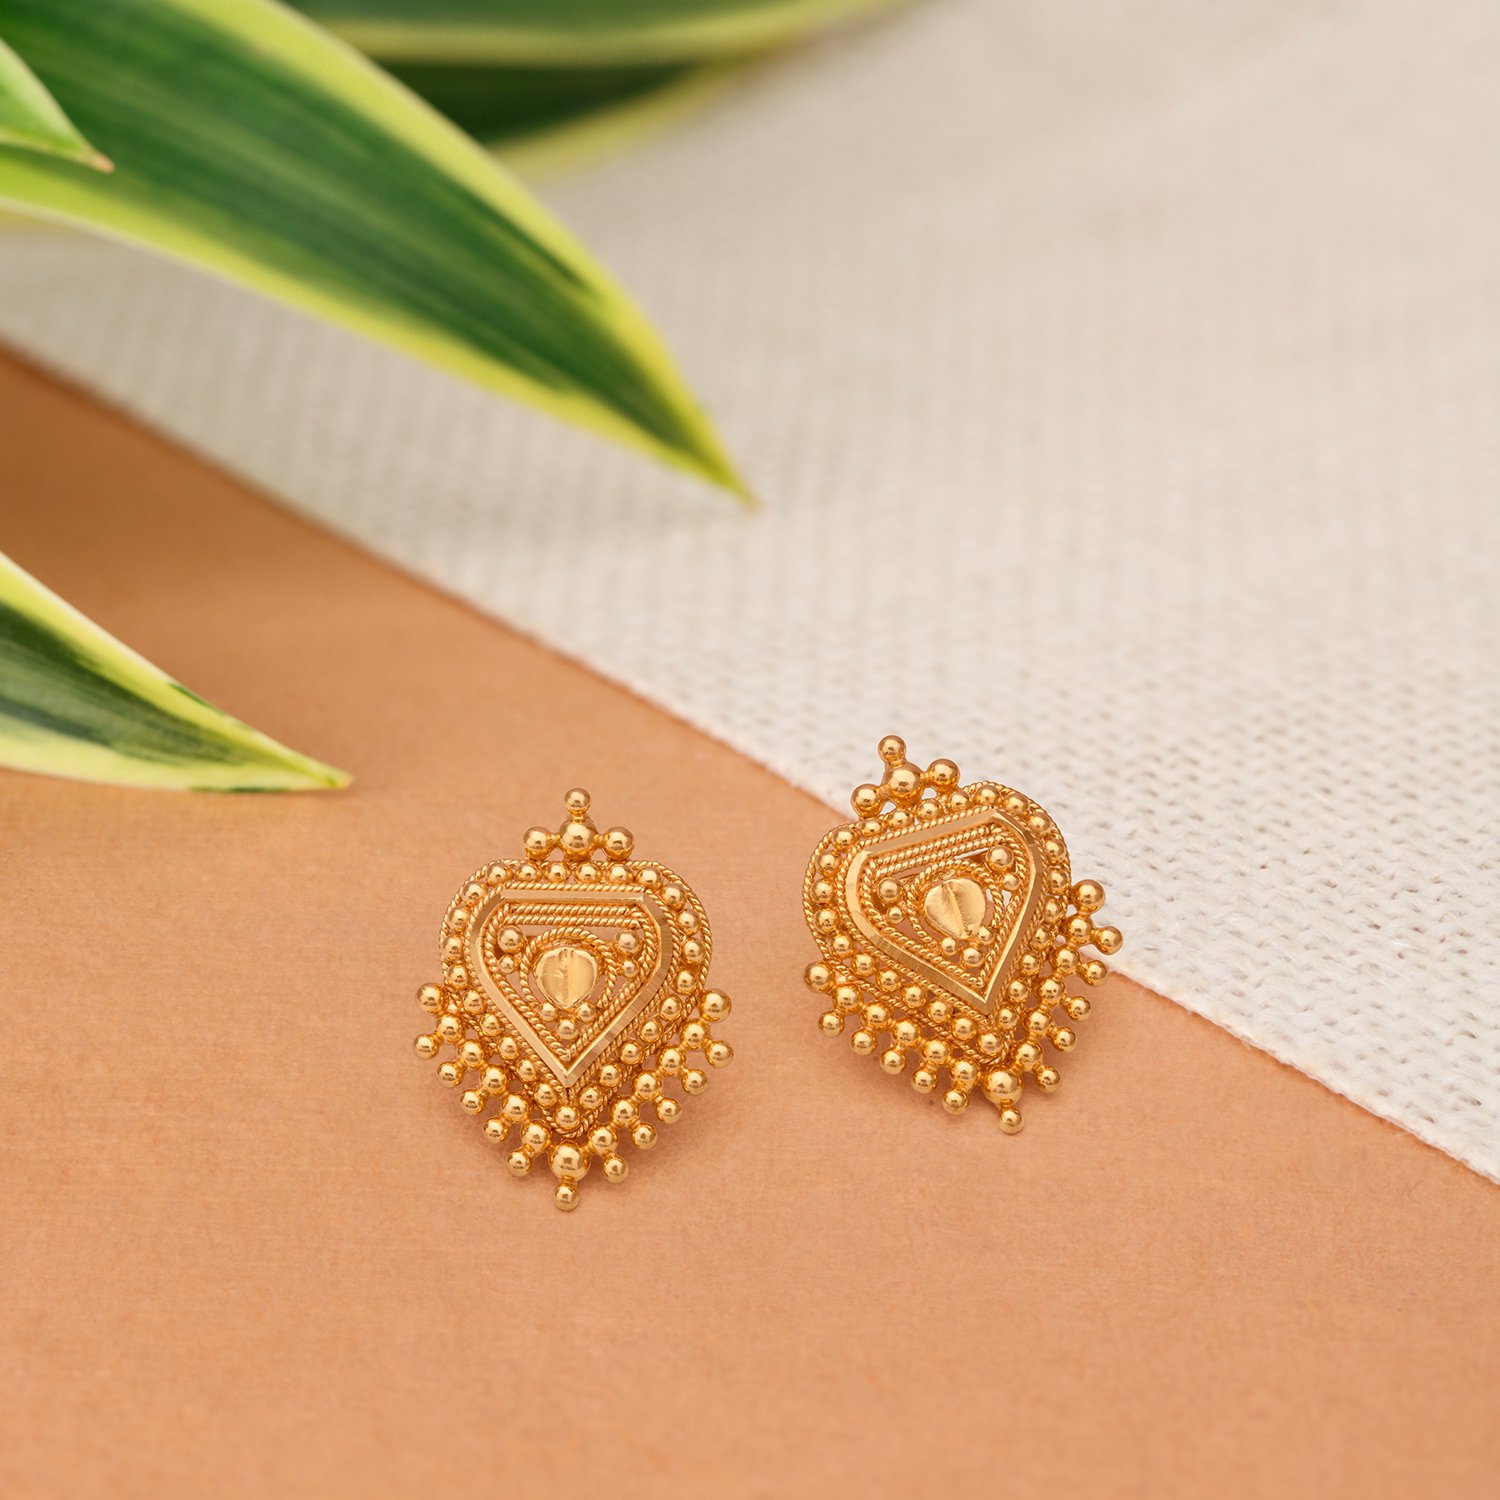 Details 96+ 24 carat gold earrings tanishq latest